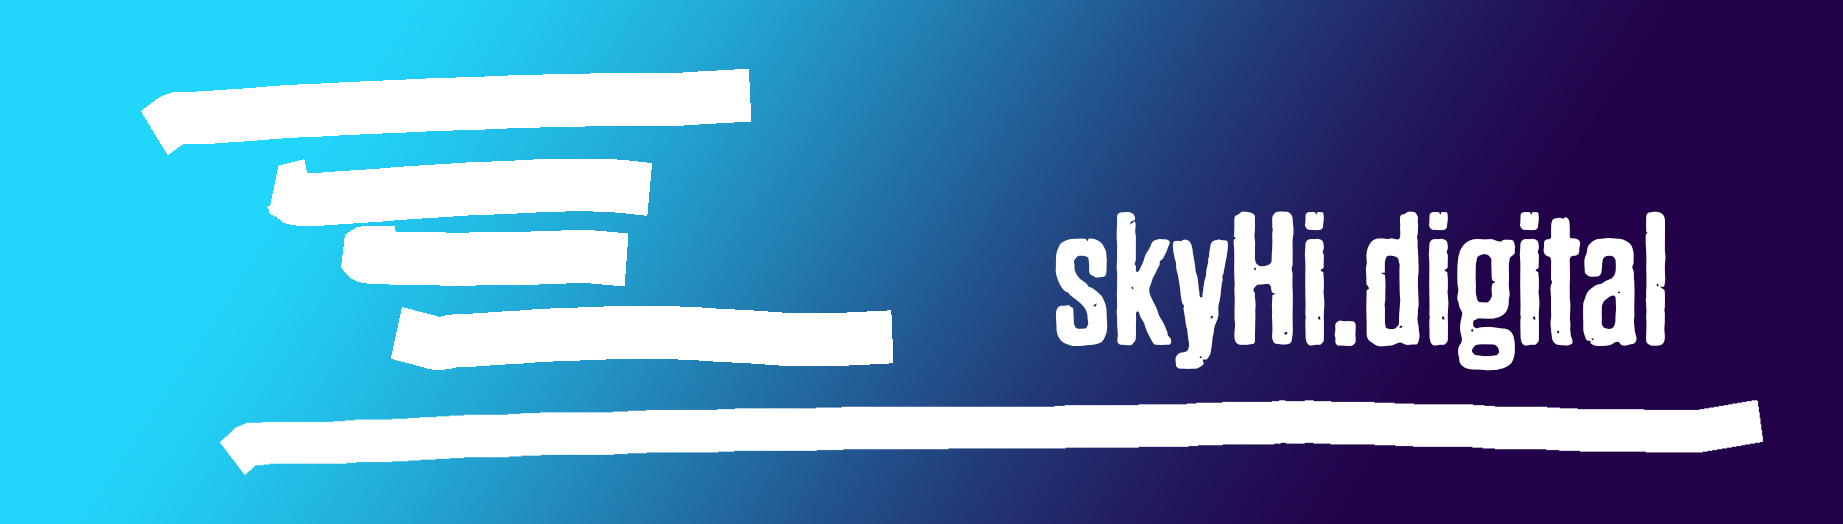 Sky Hi Digital, Inc.